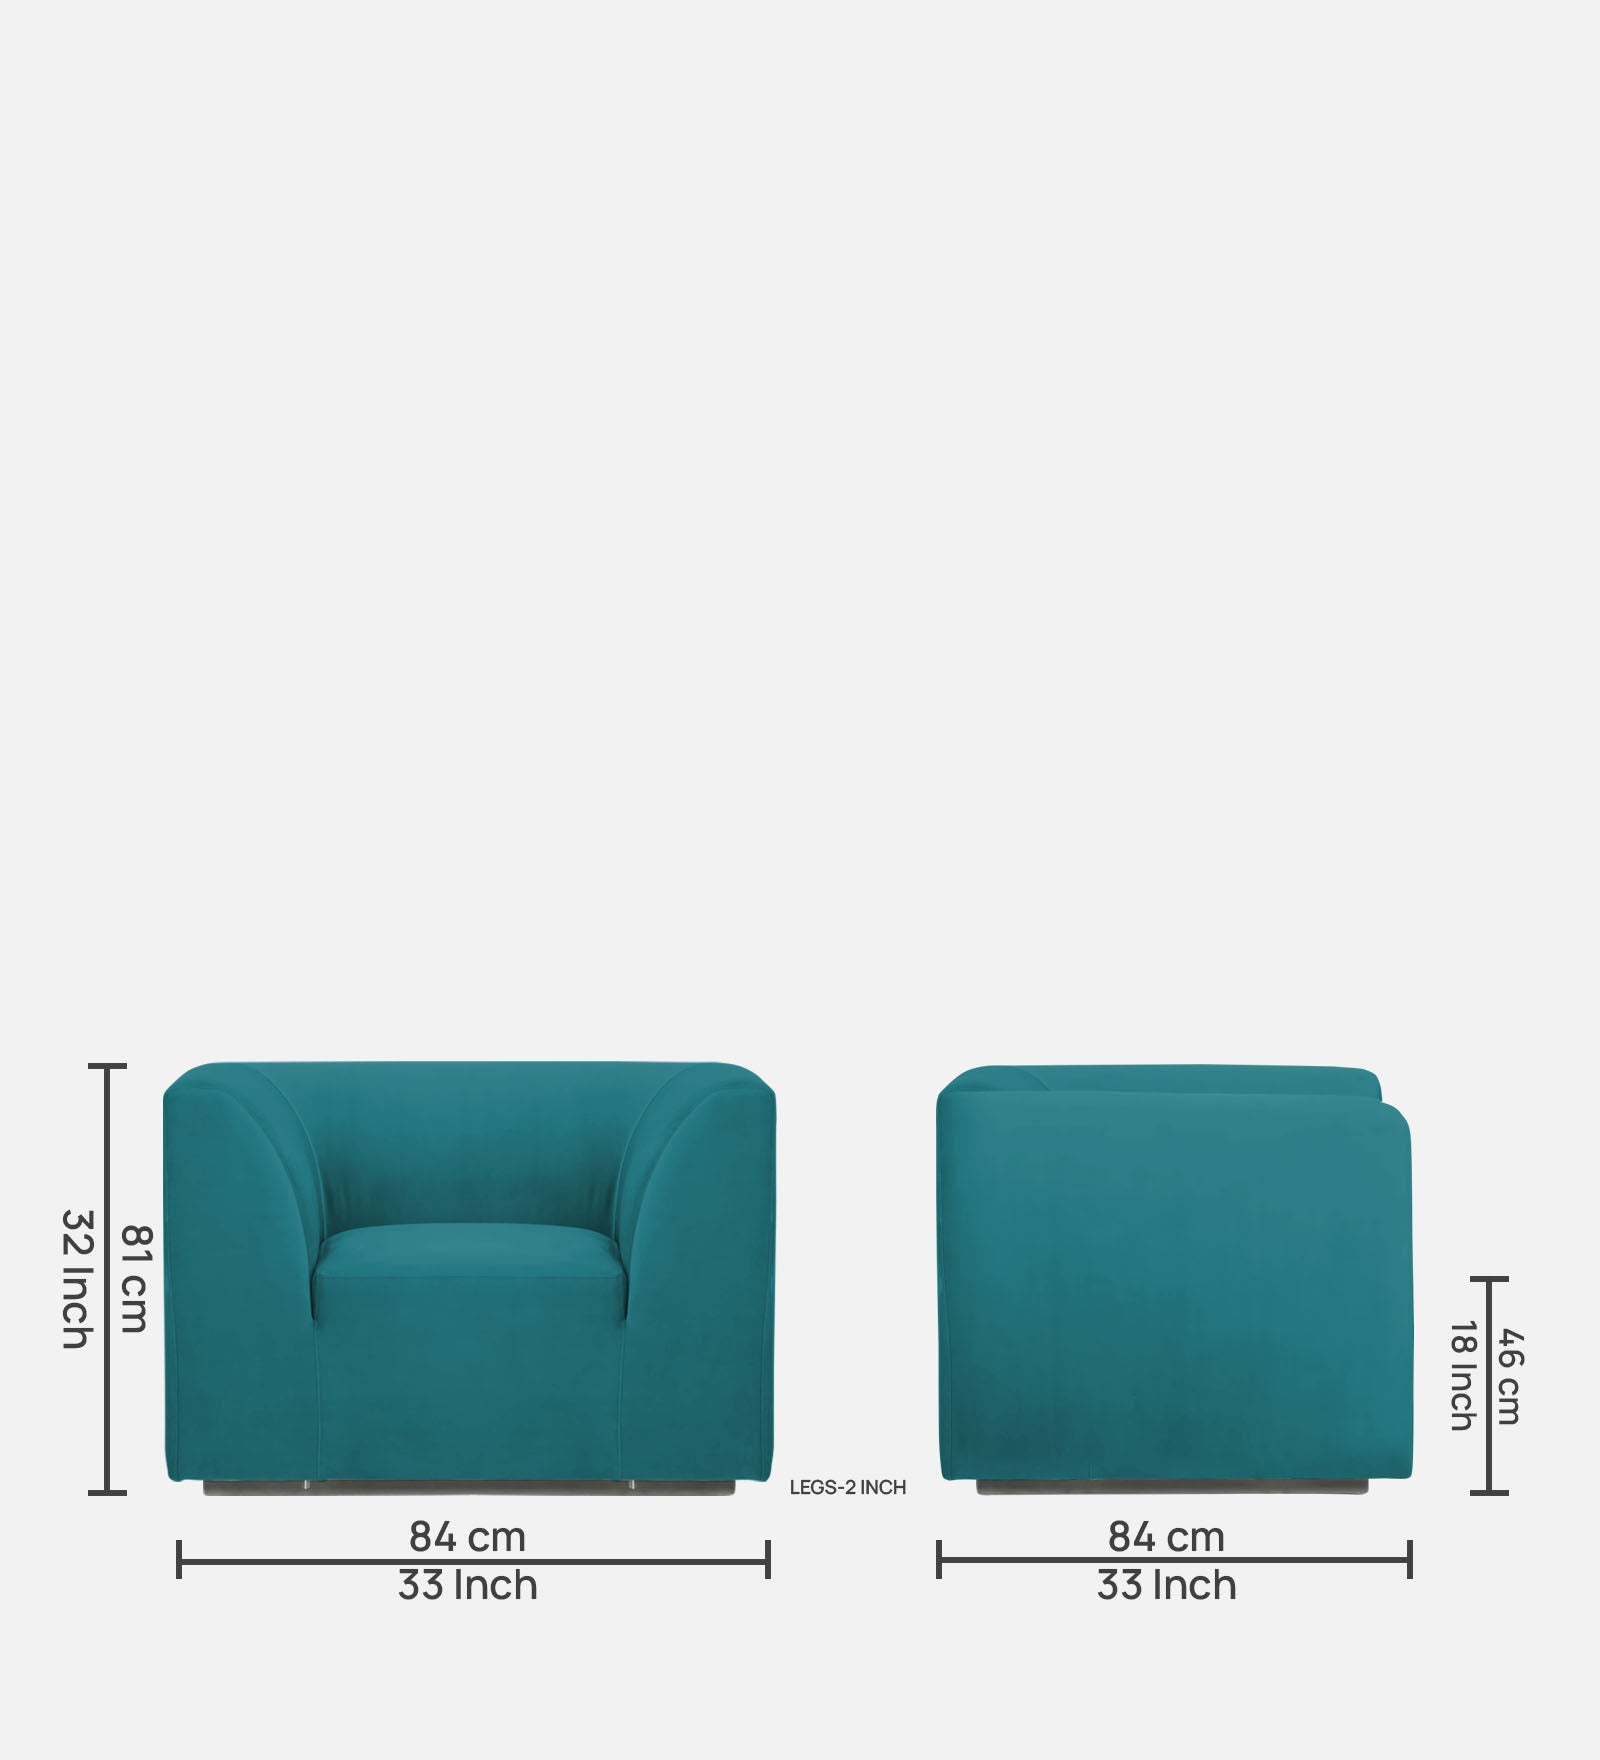 Bufa Velvet 1 Seater Sofa in Arabian green Colour